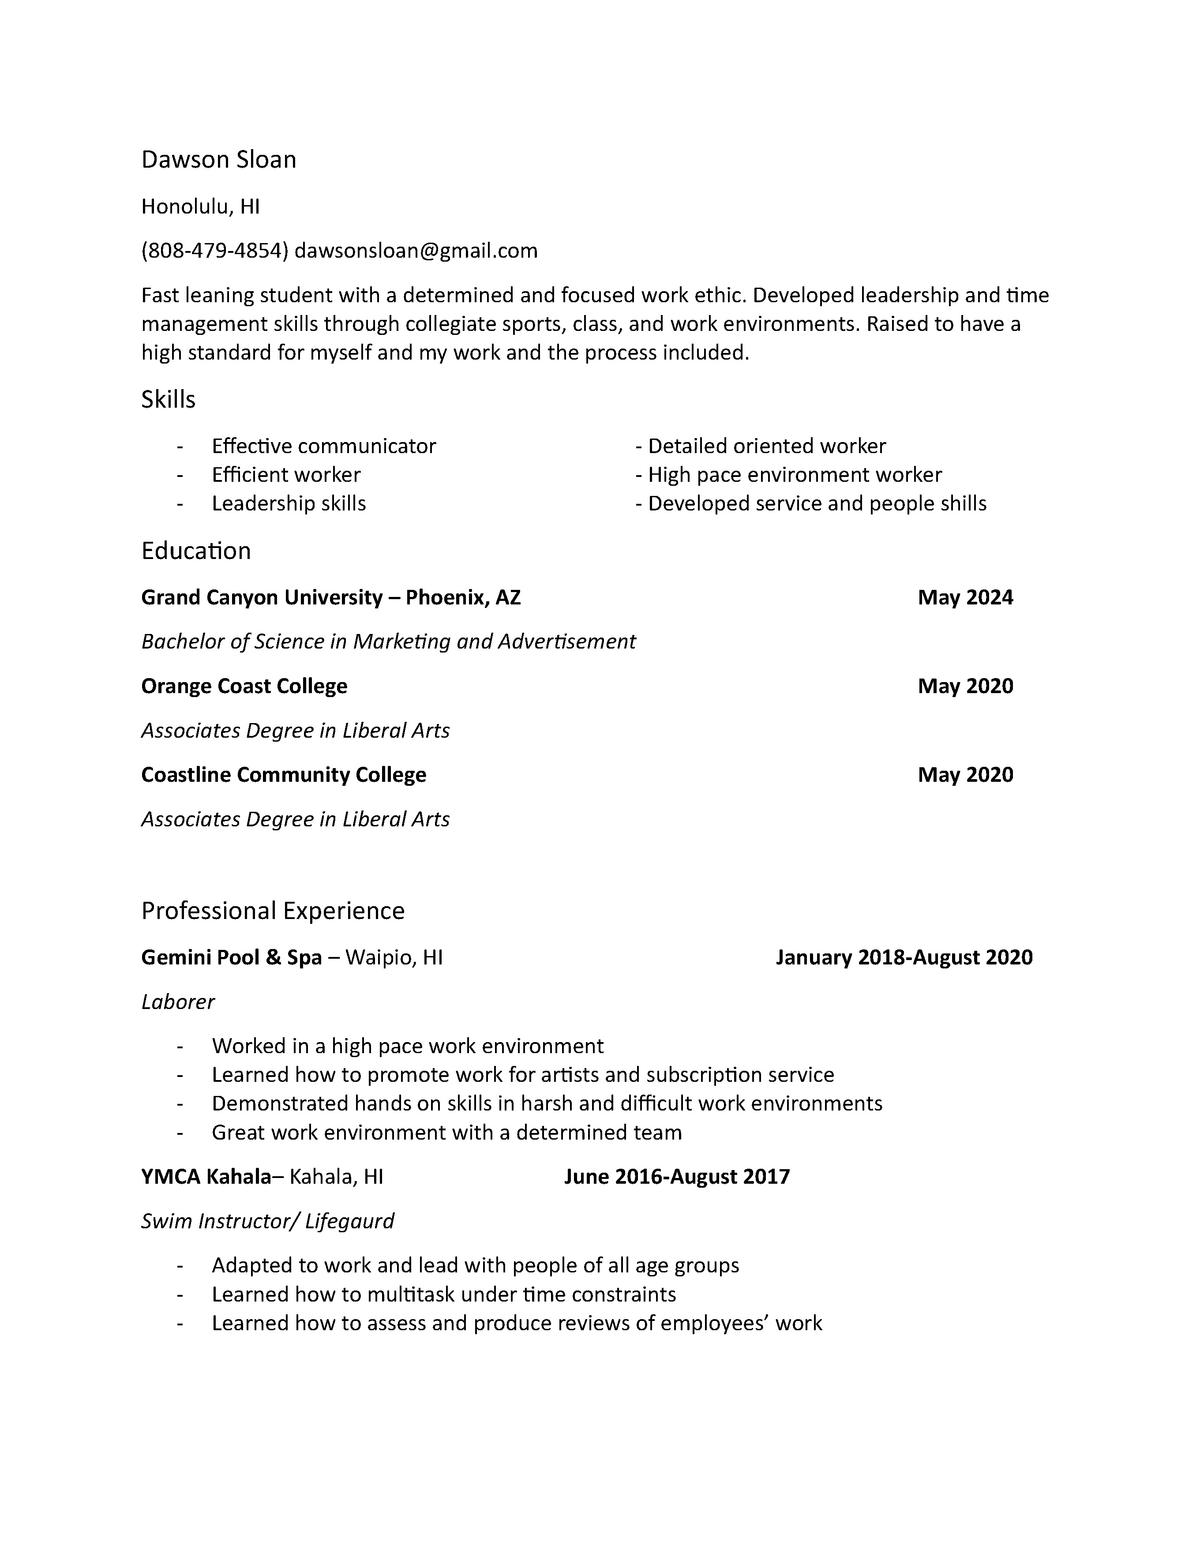 Resume, Cover Letter - Dawson Sloan Honolulu, HI (808-479-4854 ...